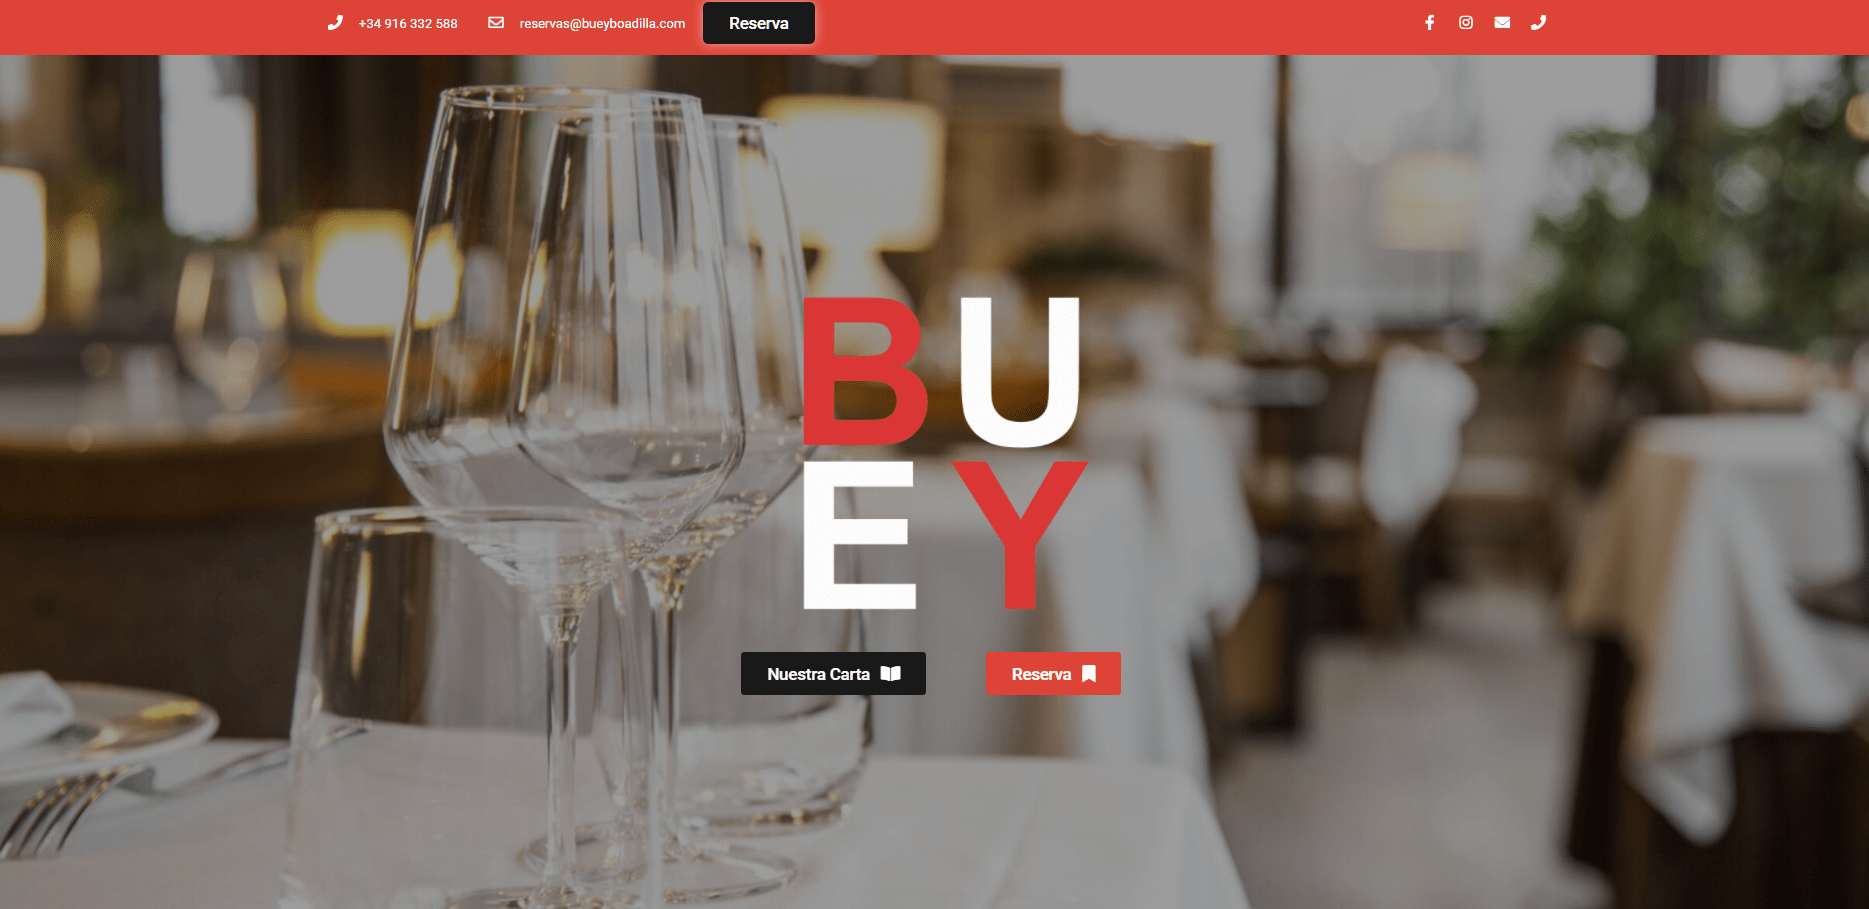 pagina web de restaurantes